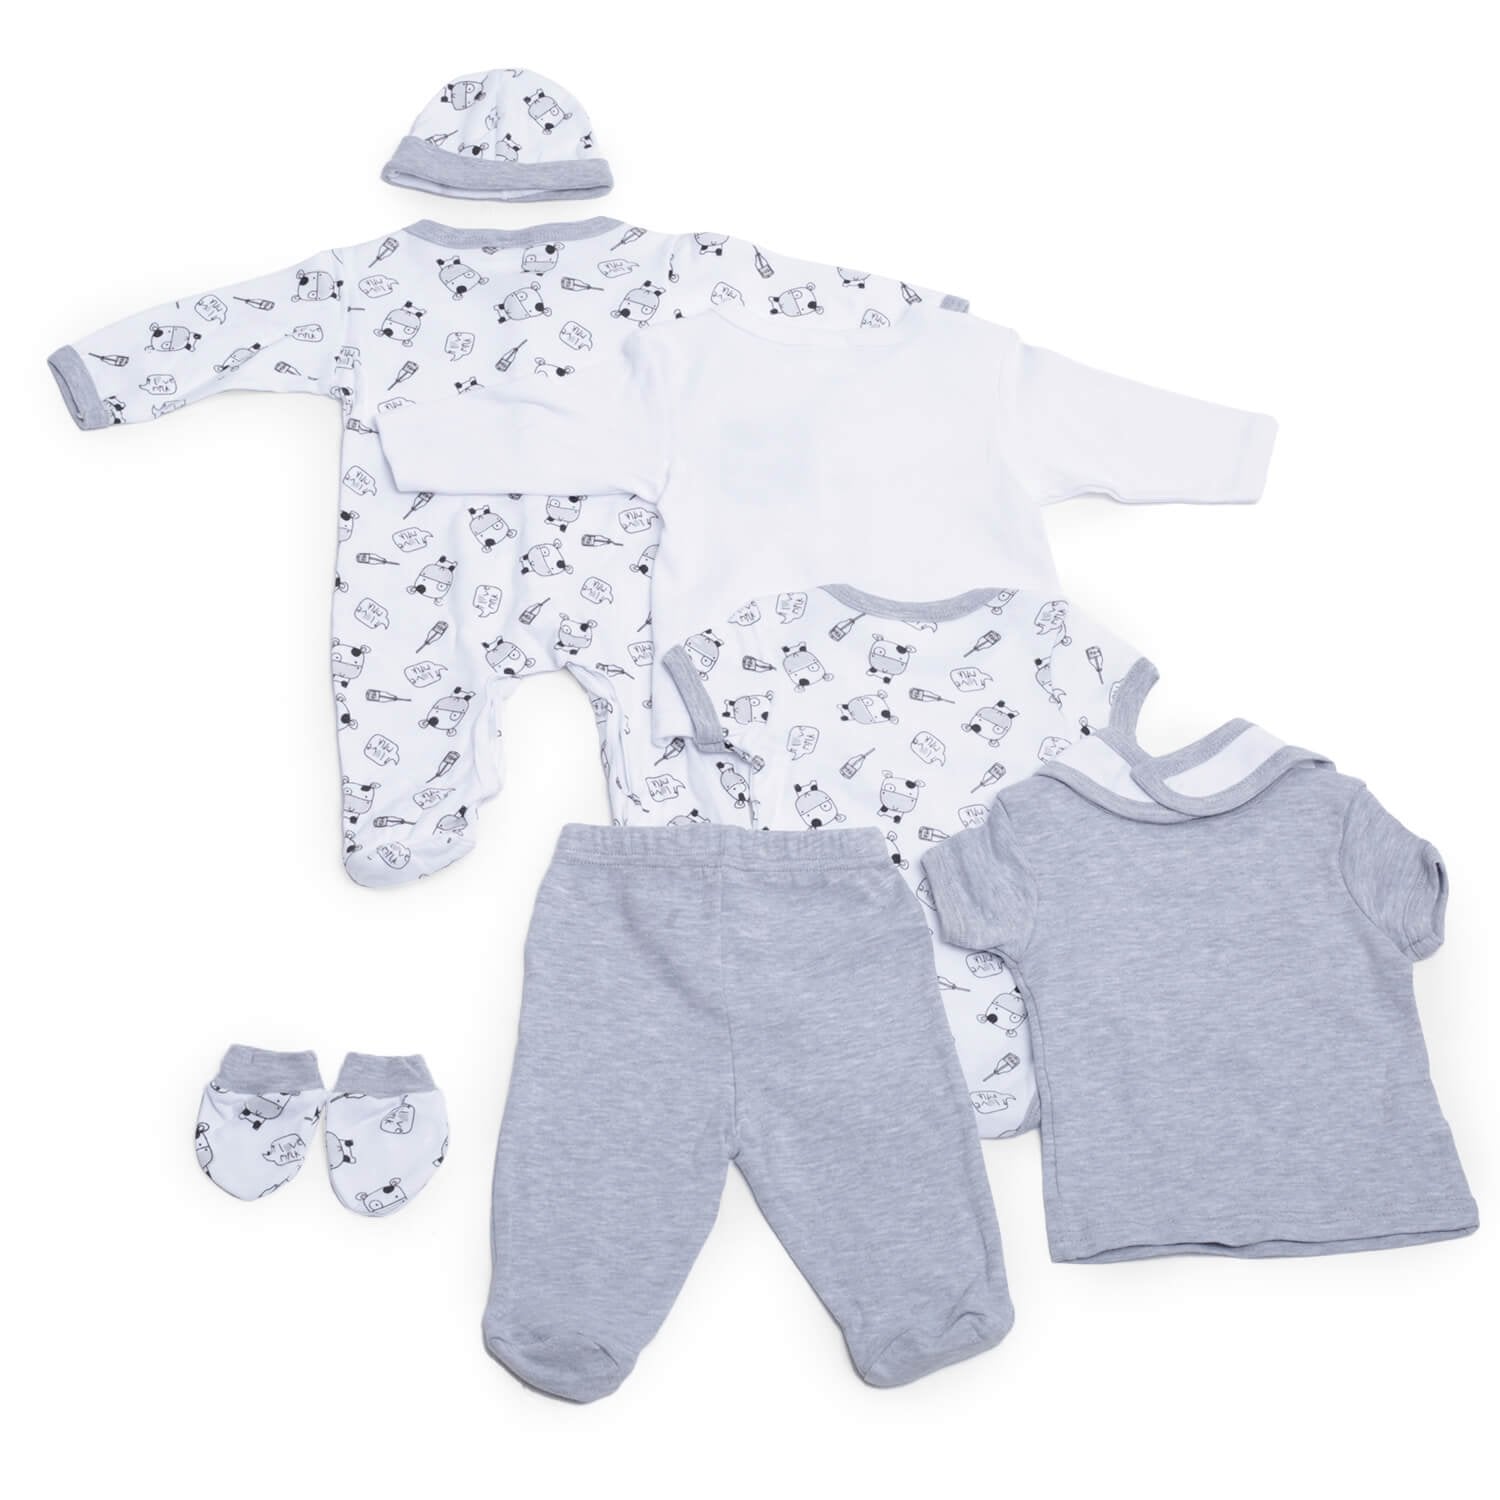 8 pcs Grey & White Cow Baby Girl/Boy Clothes Set (3-6 months) - Little Surprise Box8 pcs Grey & White Cow Baby Girl/Boy Clothes Set (3-6 months)